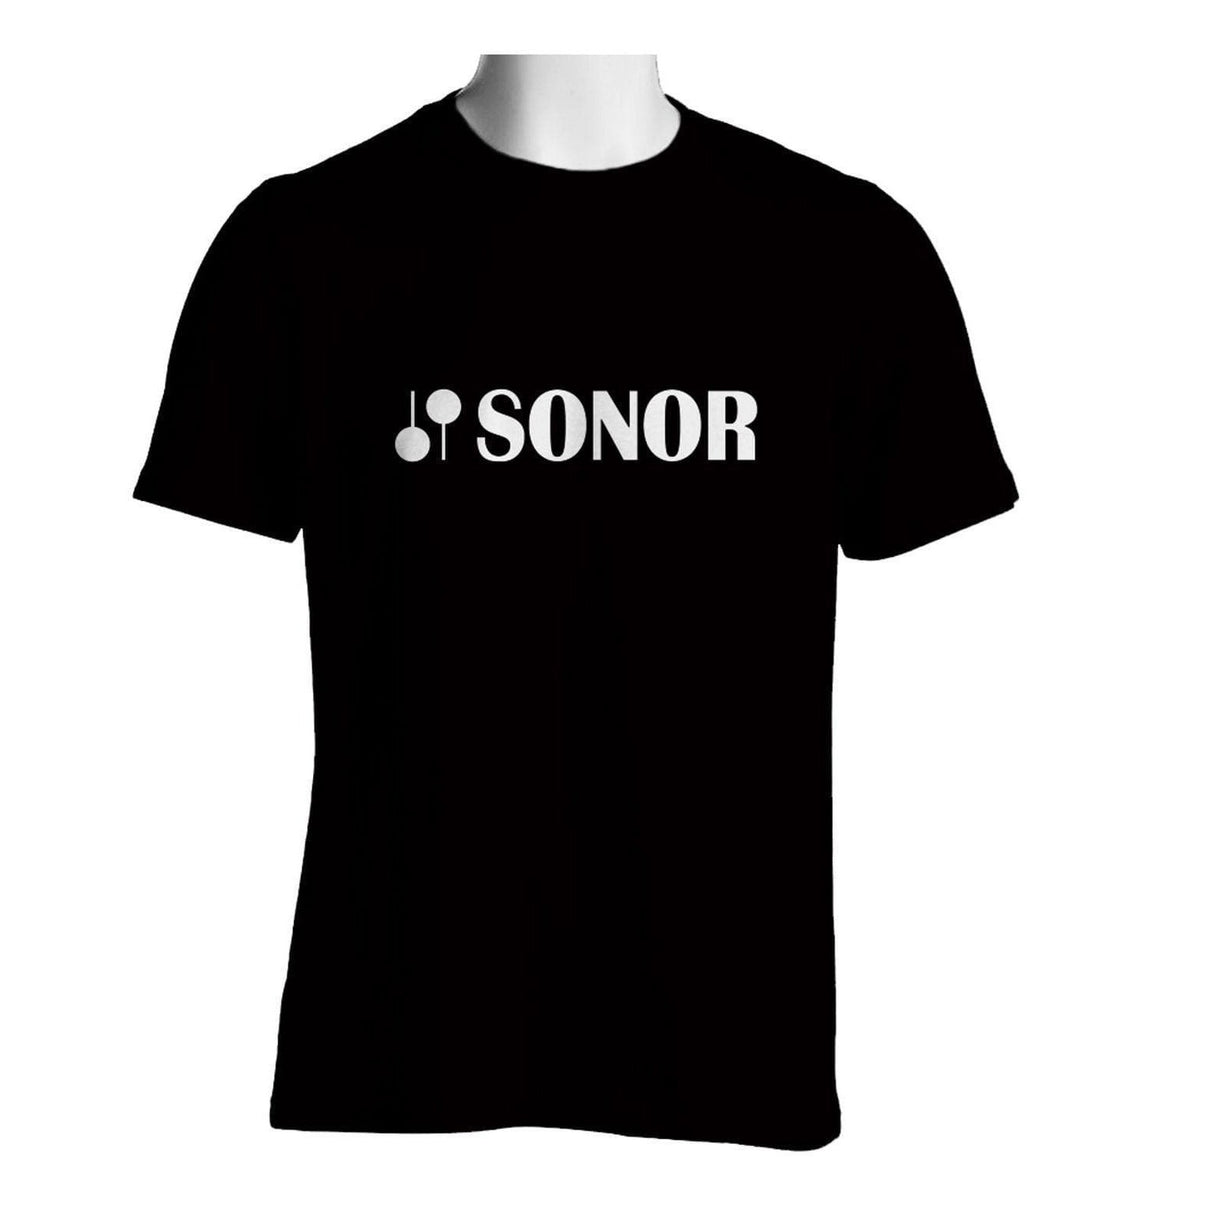 Sonor T-Shirt Black - Small